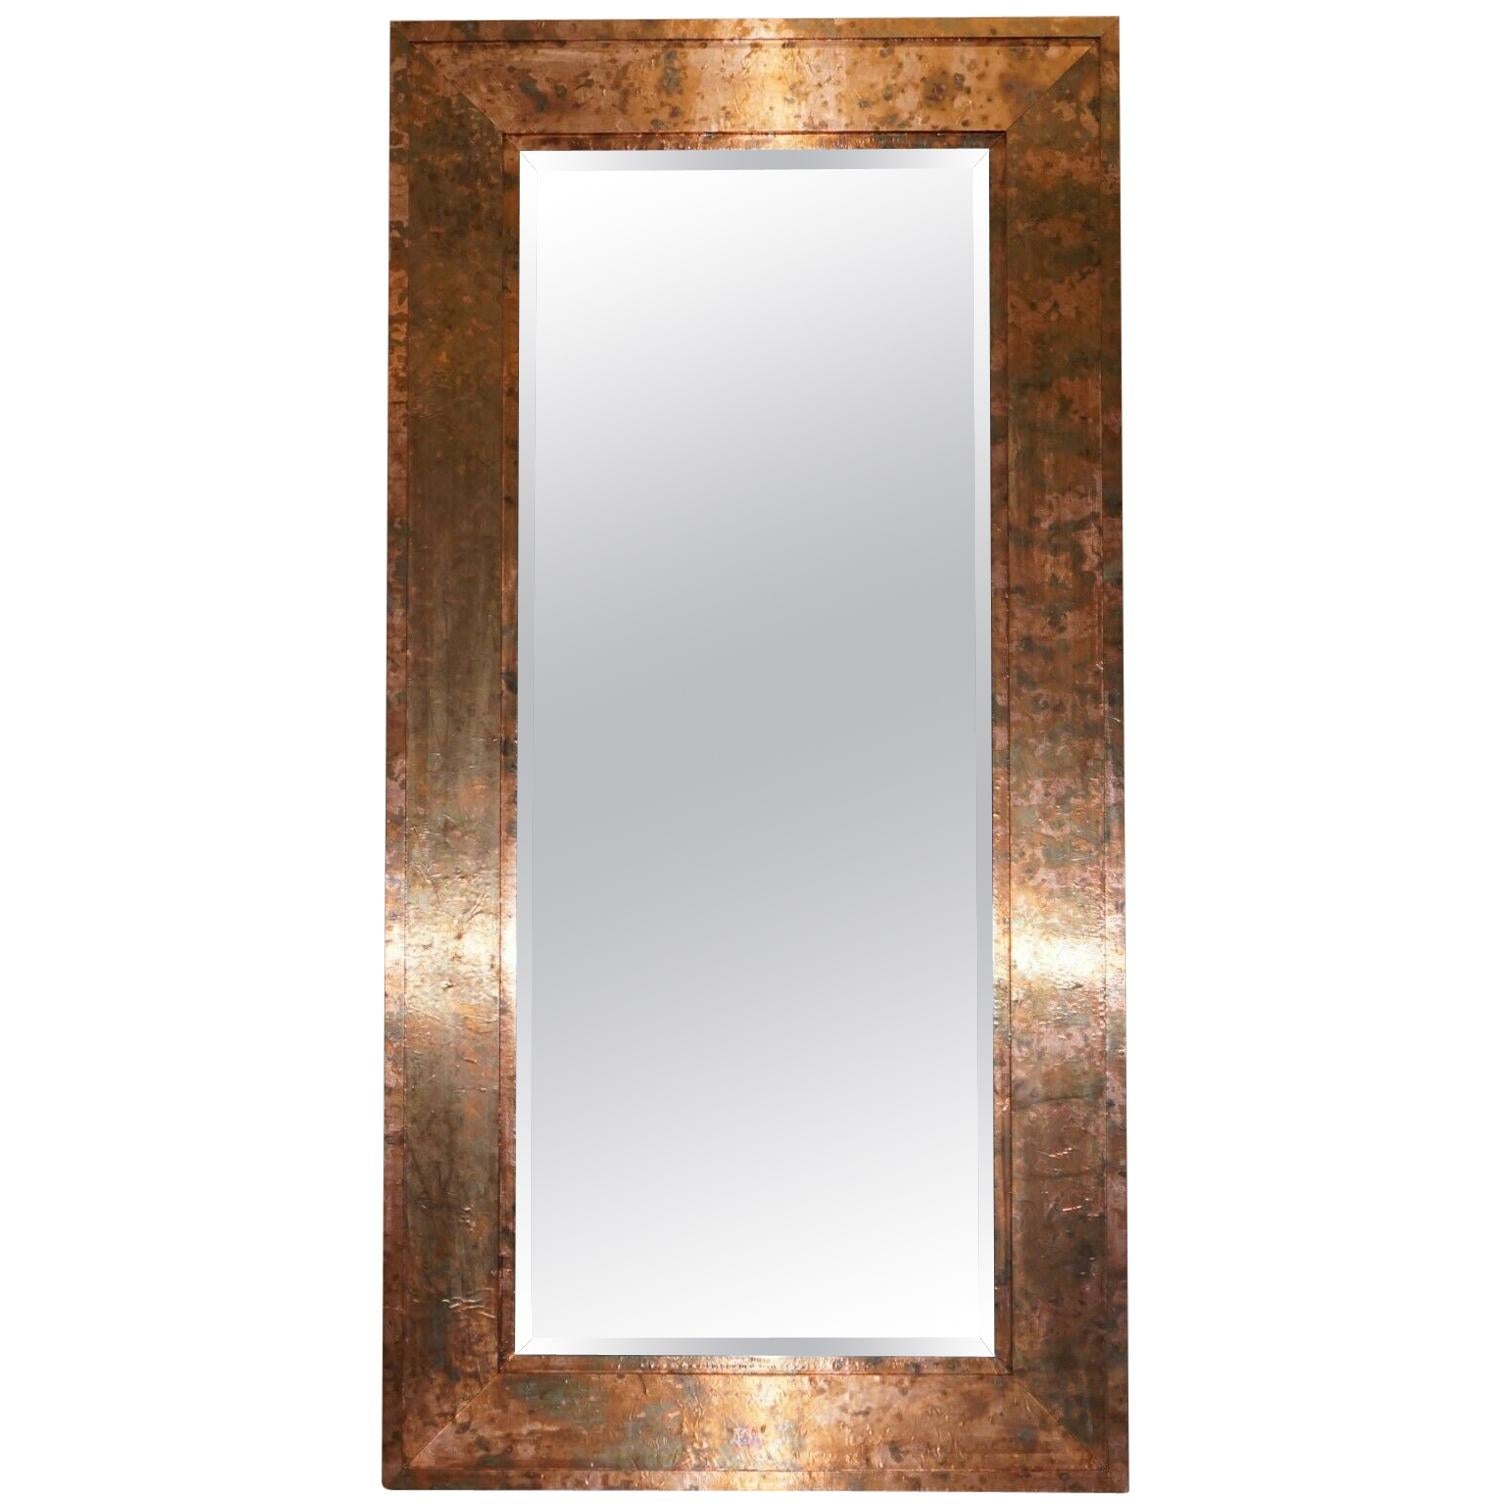 Large Vintage Style Distressed Copper Frame Mirror Bevelled Edge